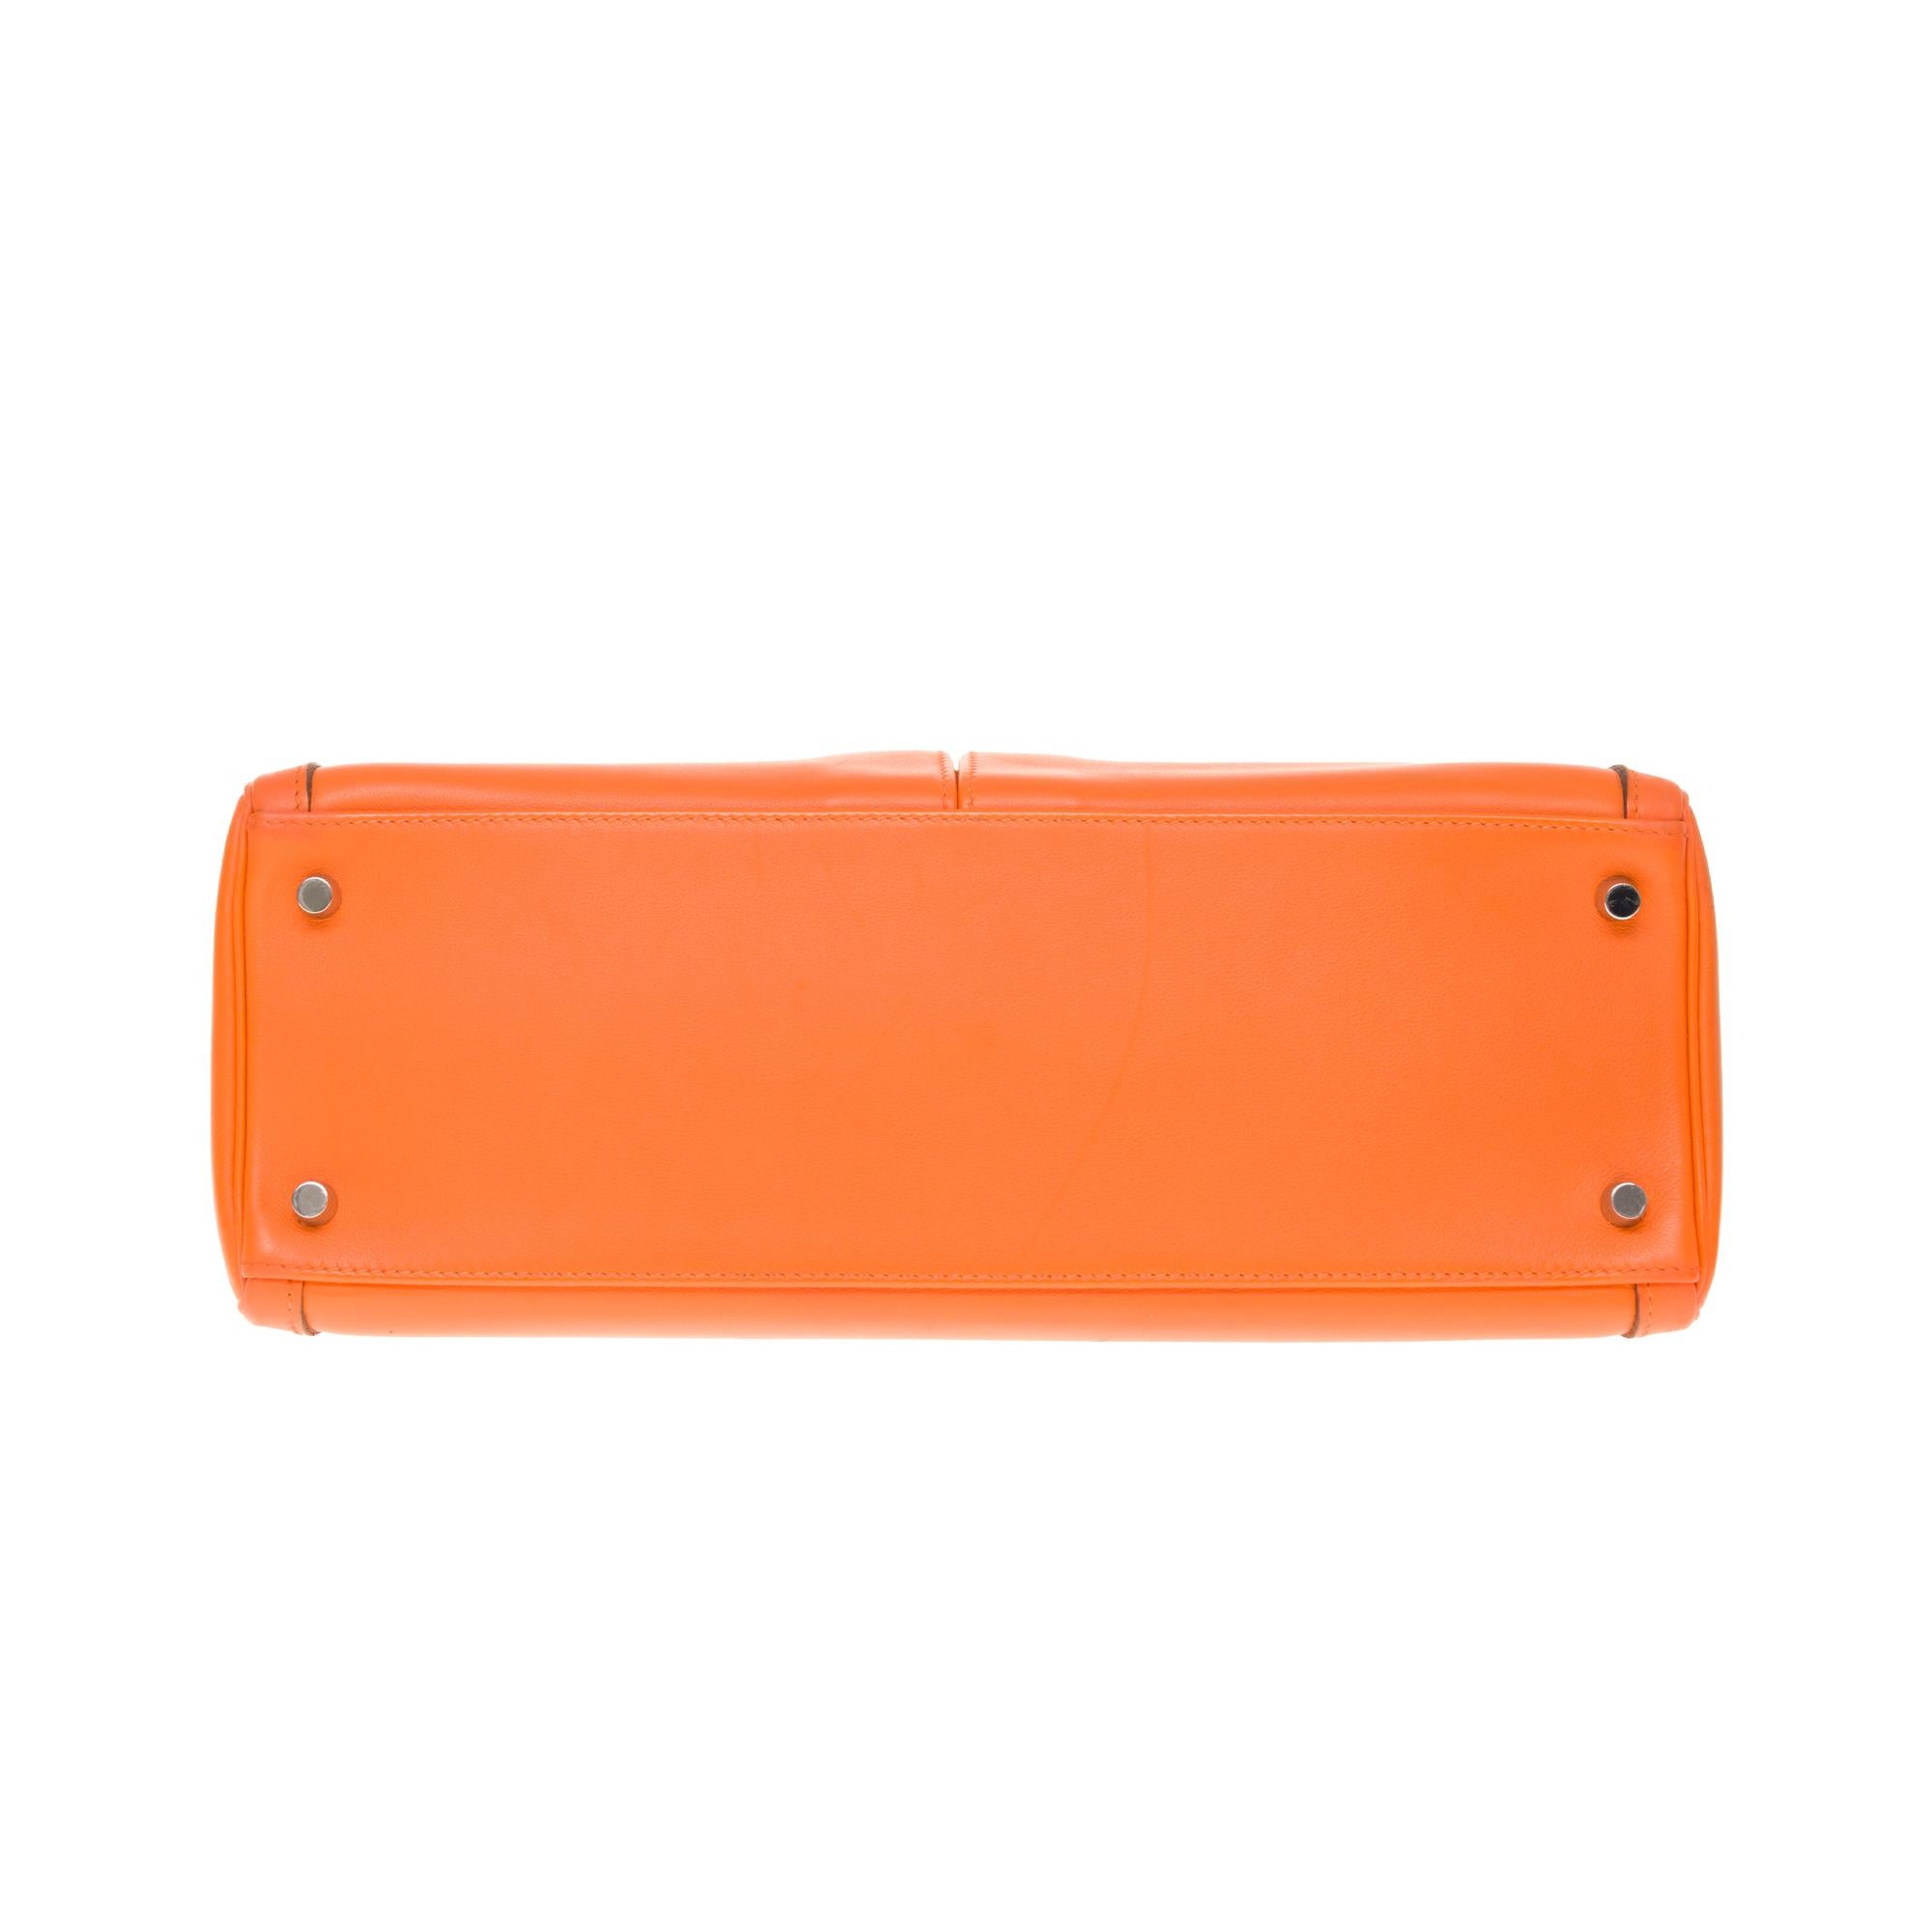 Rare Hermès Kelly Lakis 35 handbag with strap in orange swift calf leather, PHW 2